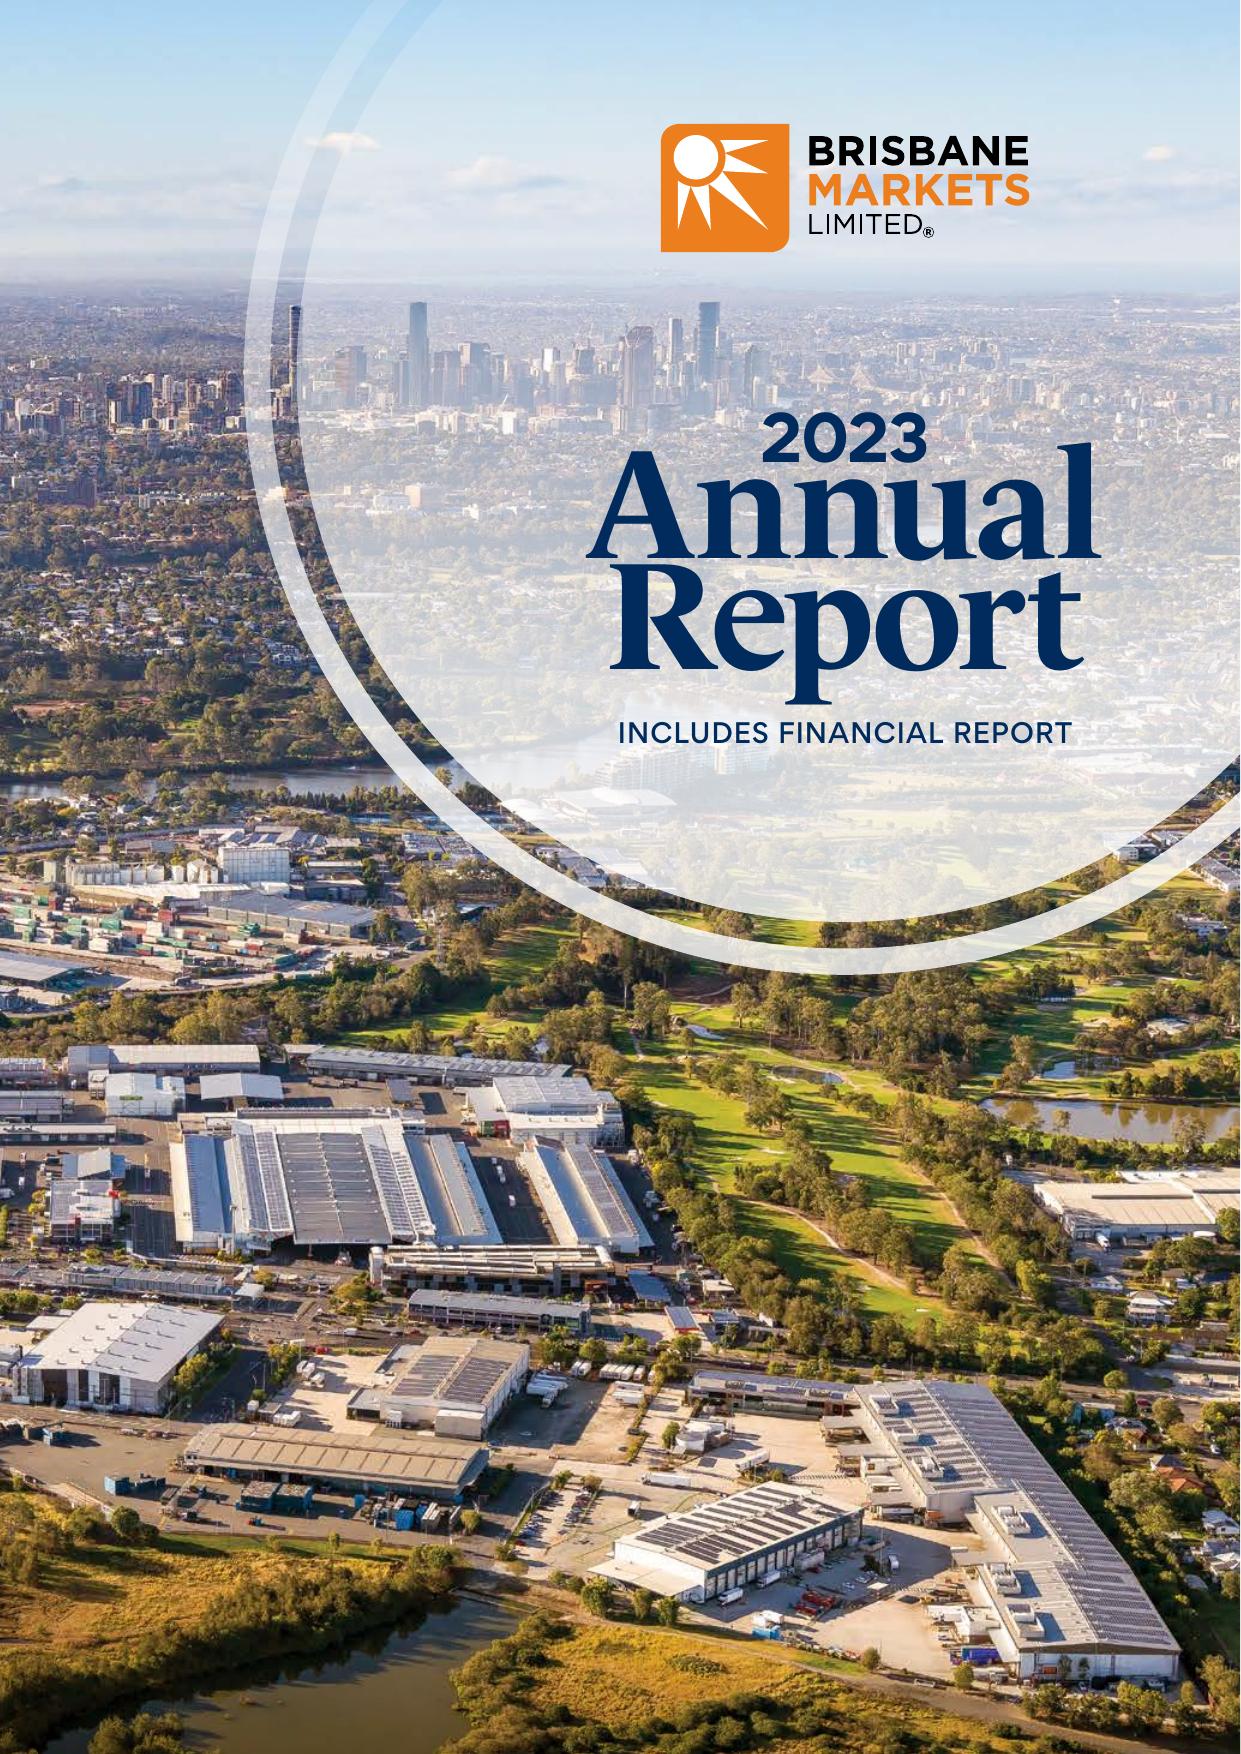 BRISBANEMARKETS 2023 Annual Report